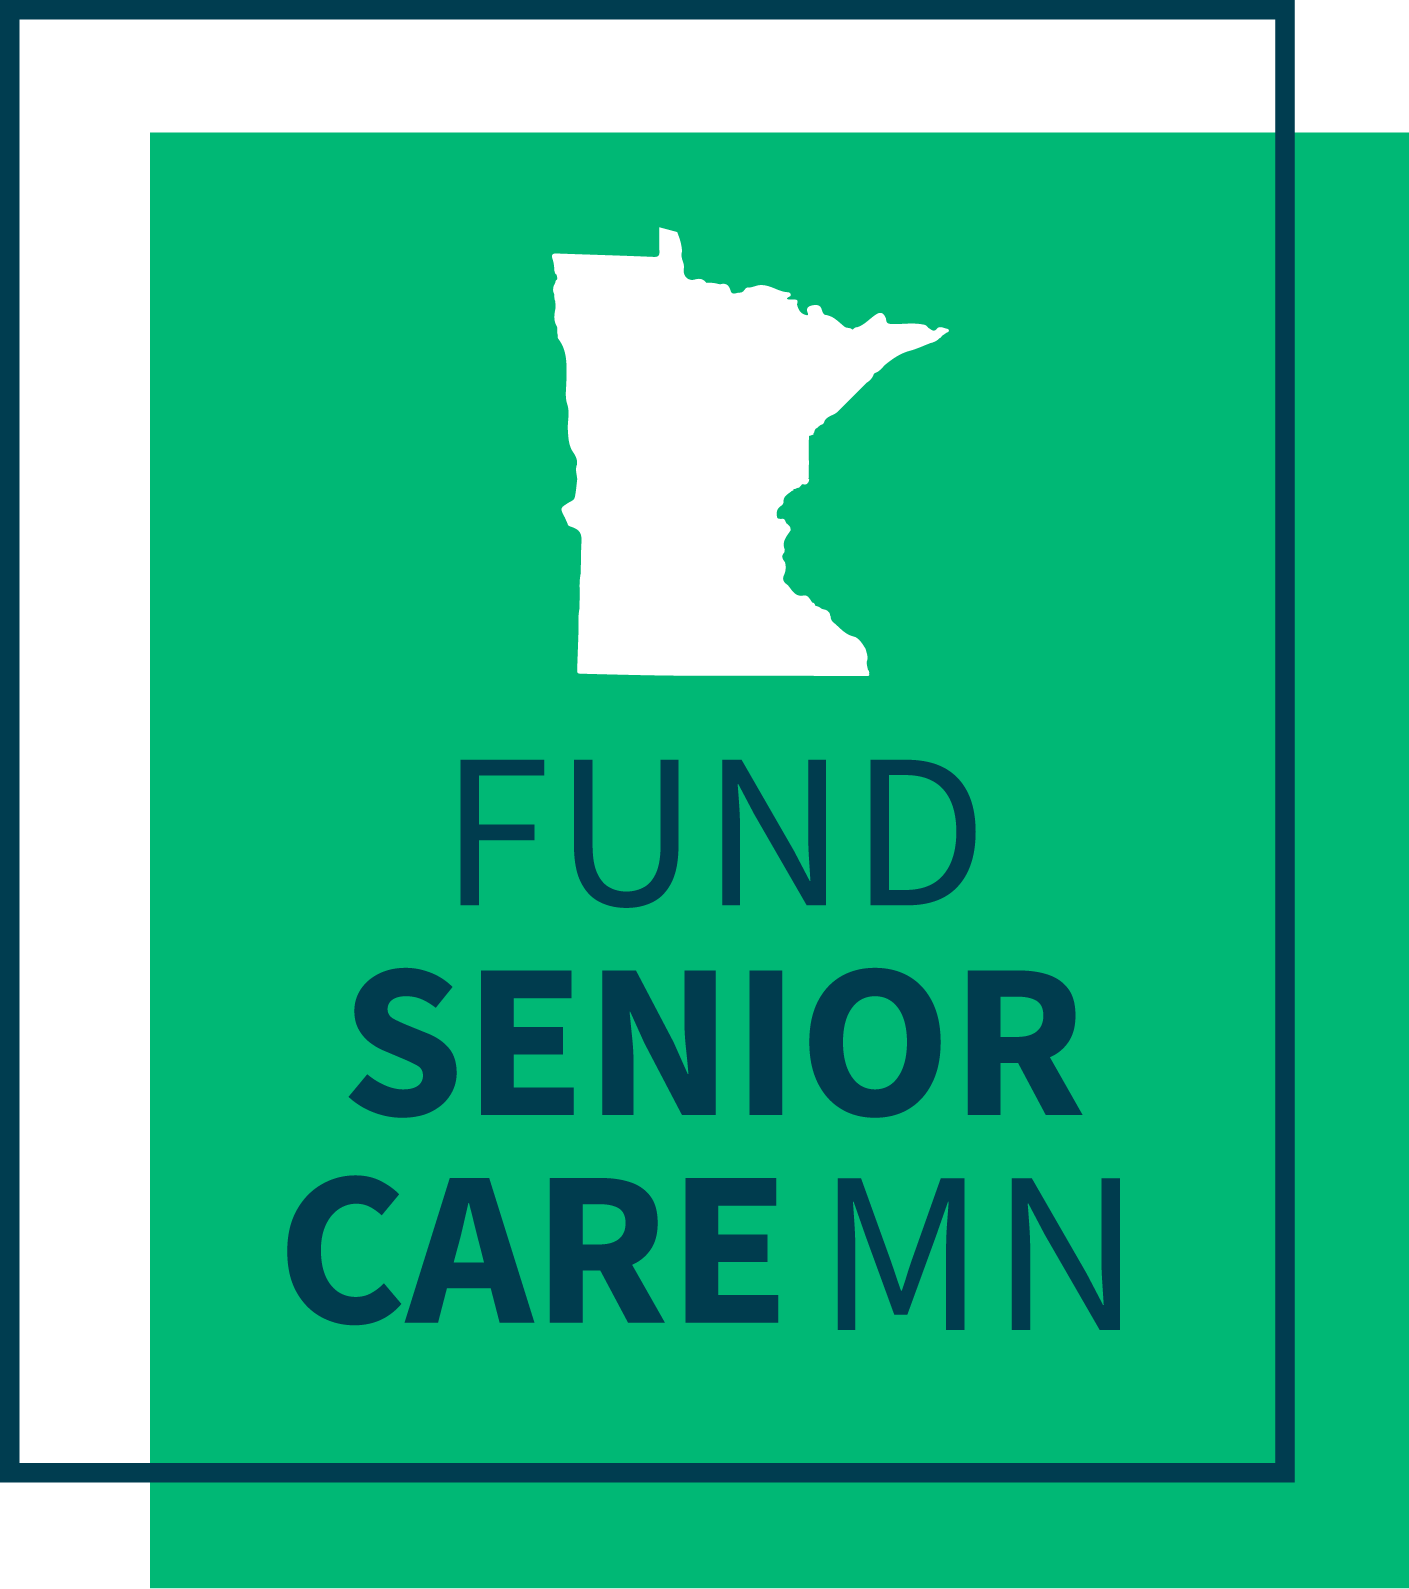 Fund MN Senior Care logo